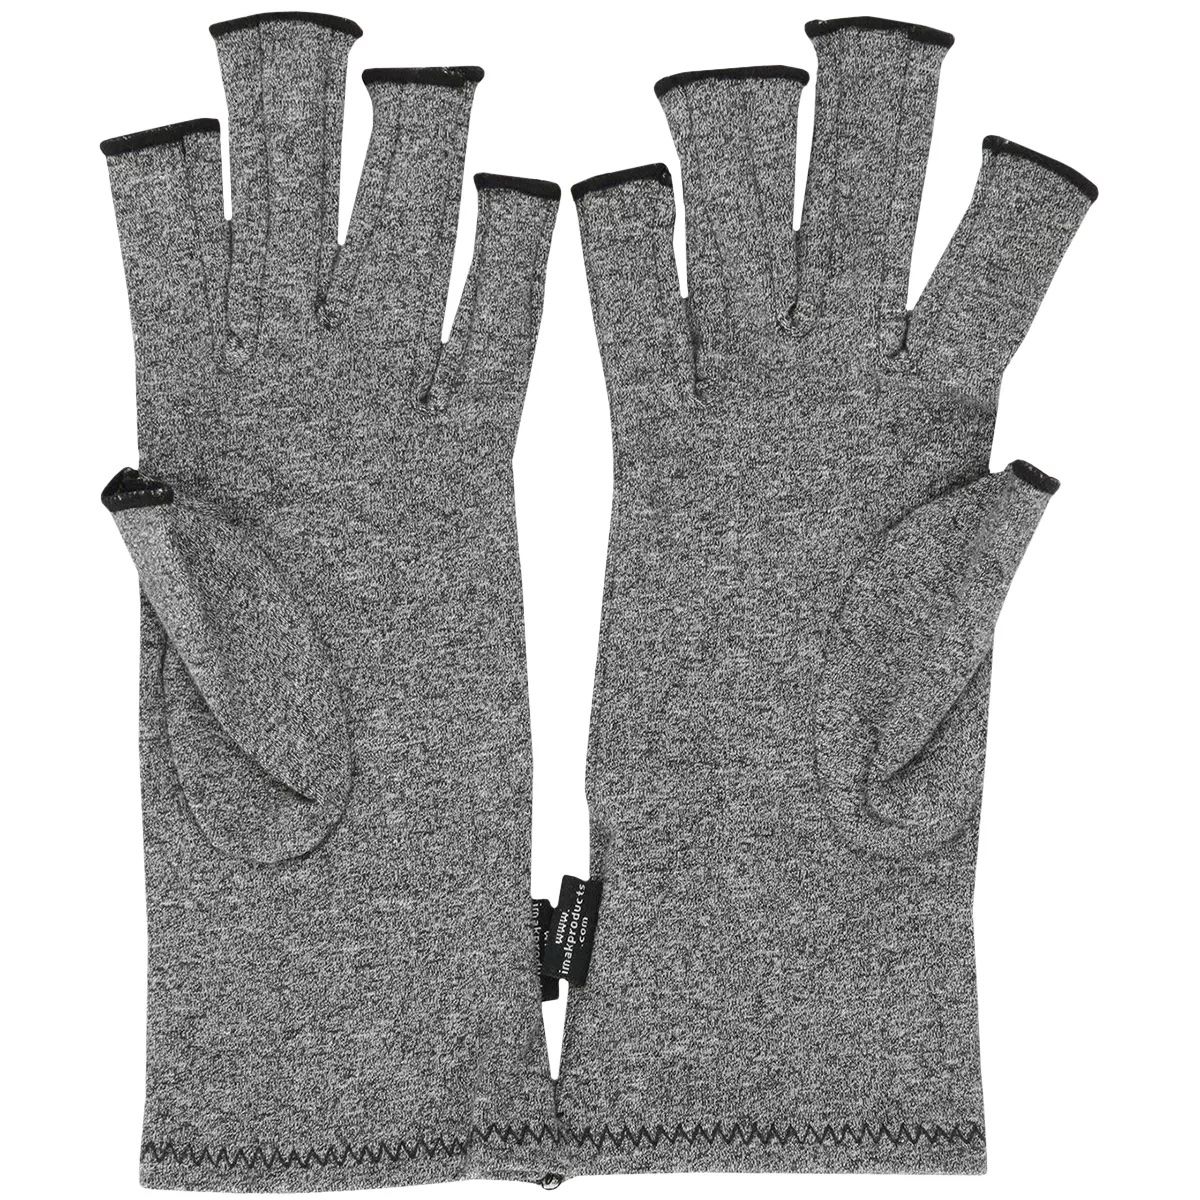 Imak Compression Arthritis Gloves, Small - 1 Pair